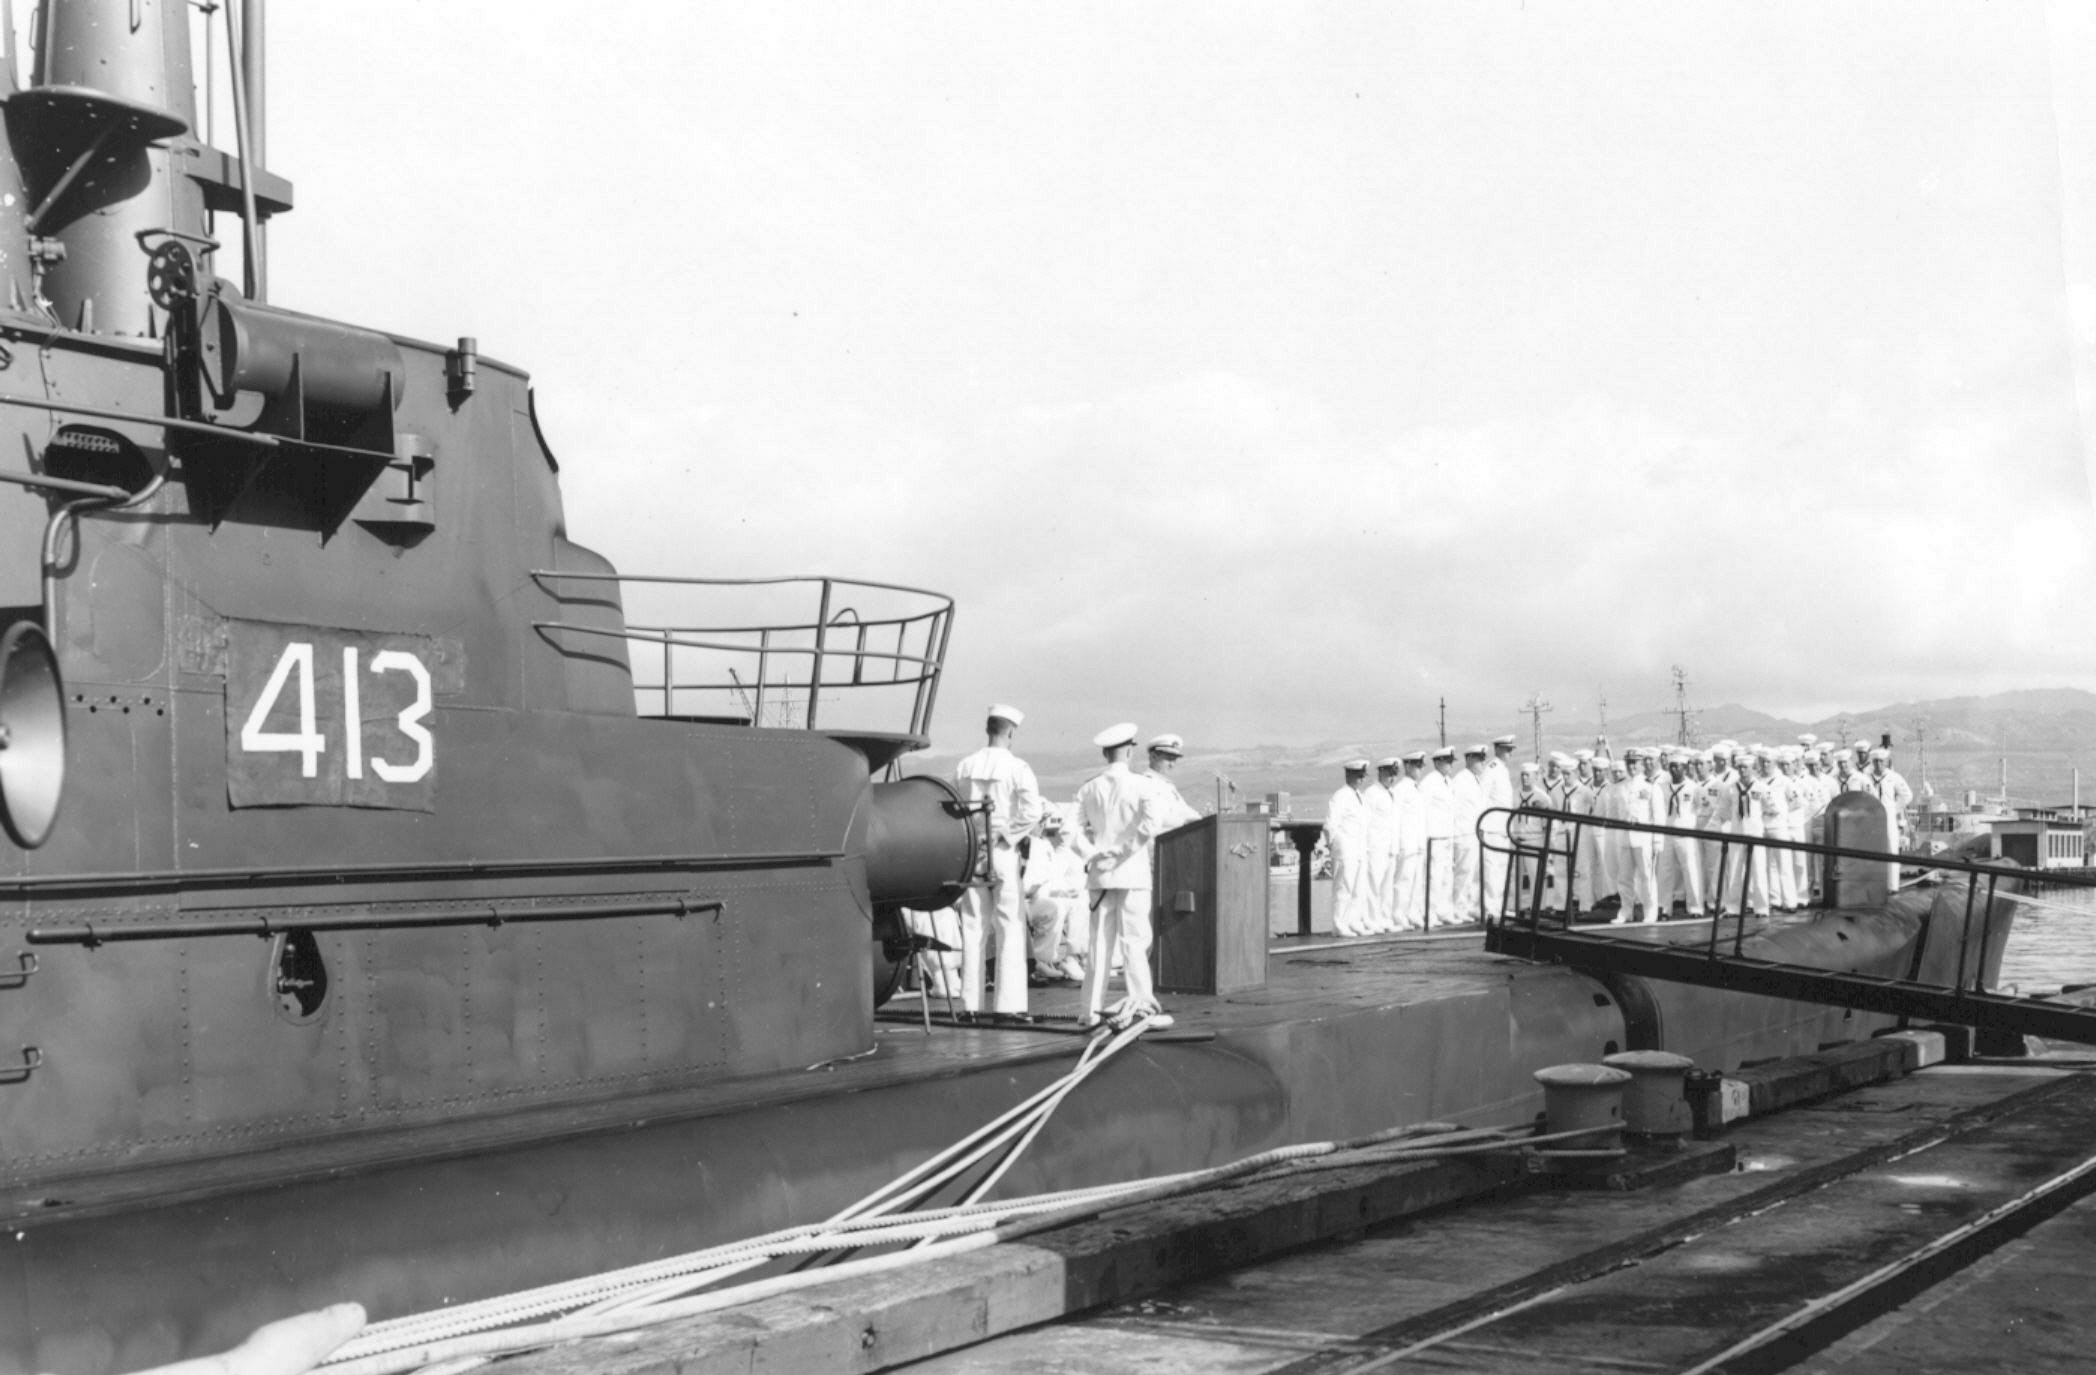 Decommissioning ceremony of USS Spot, 12 Jan 1962